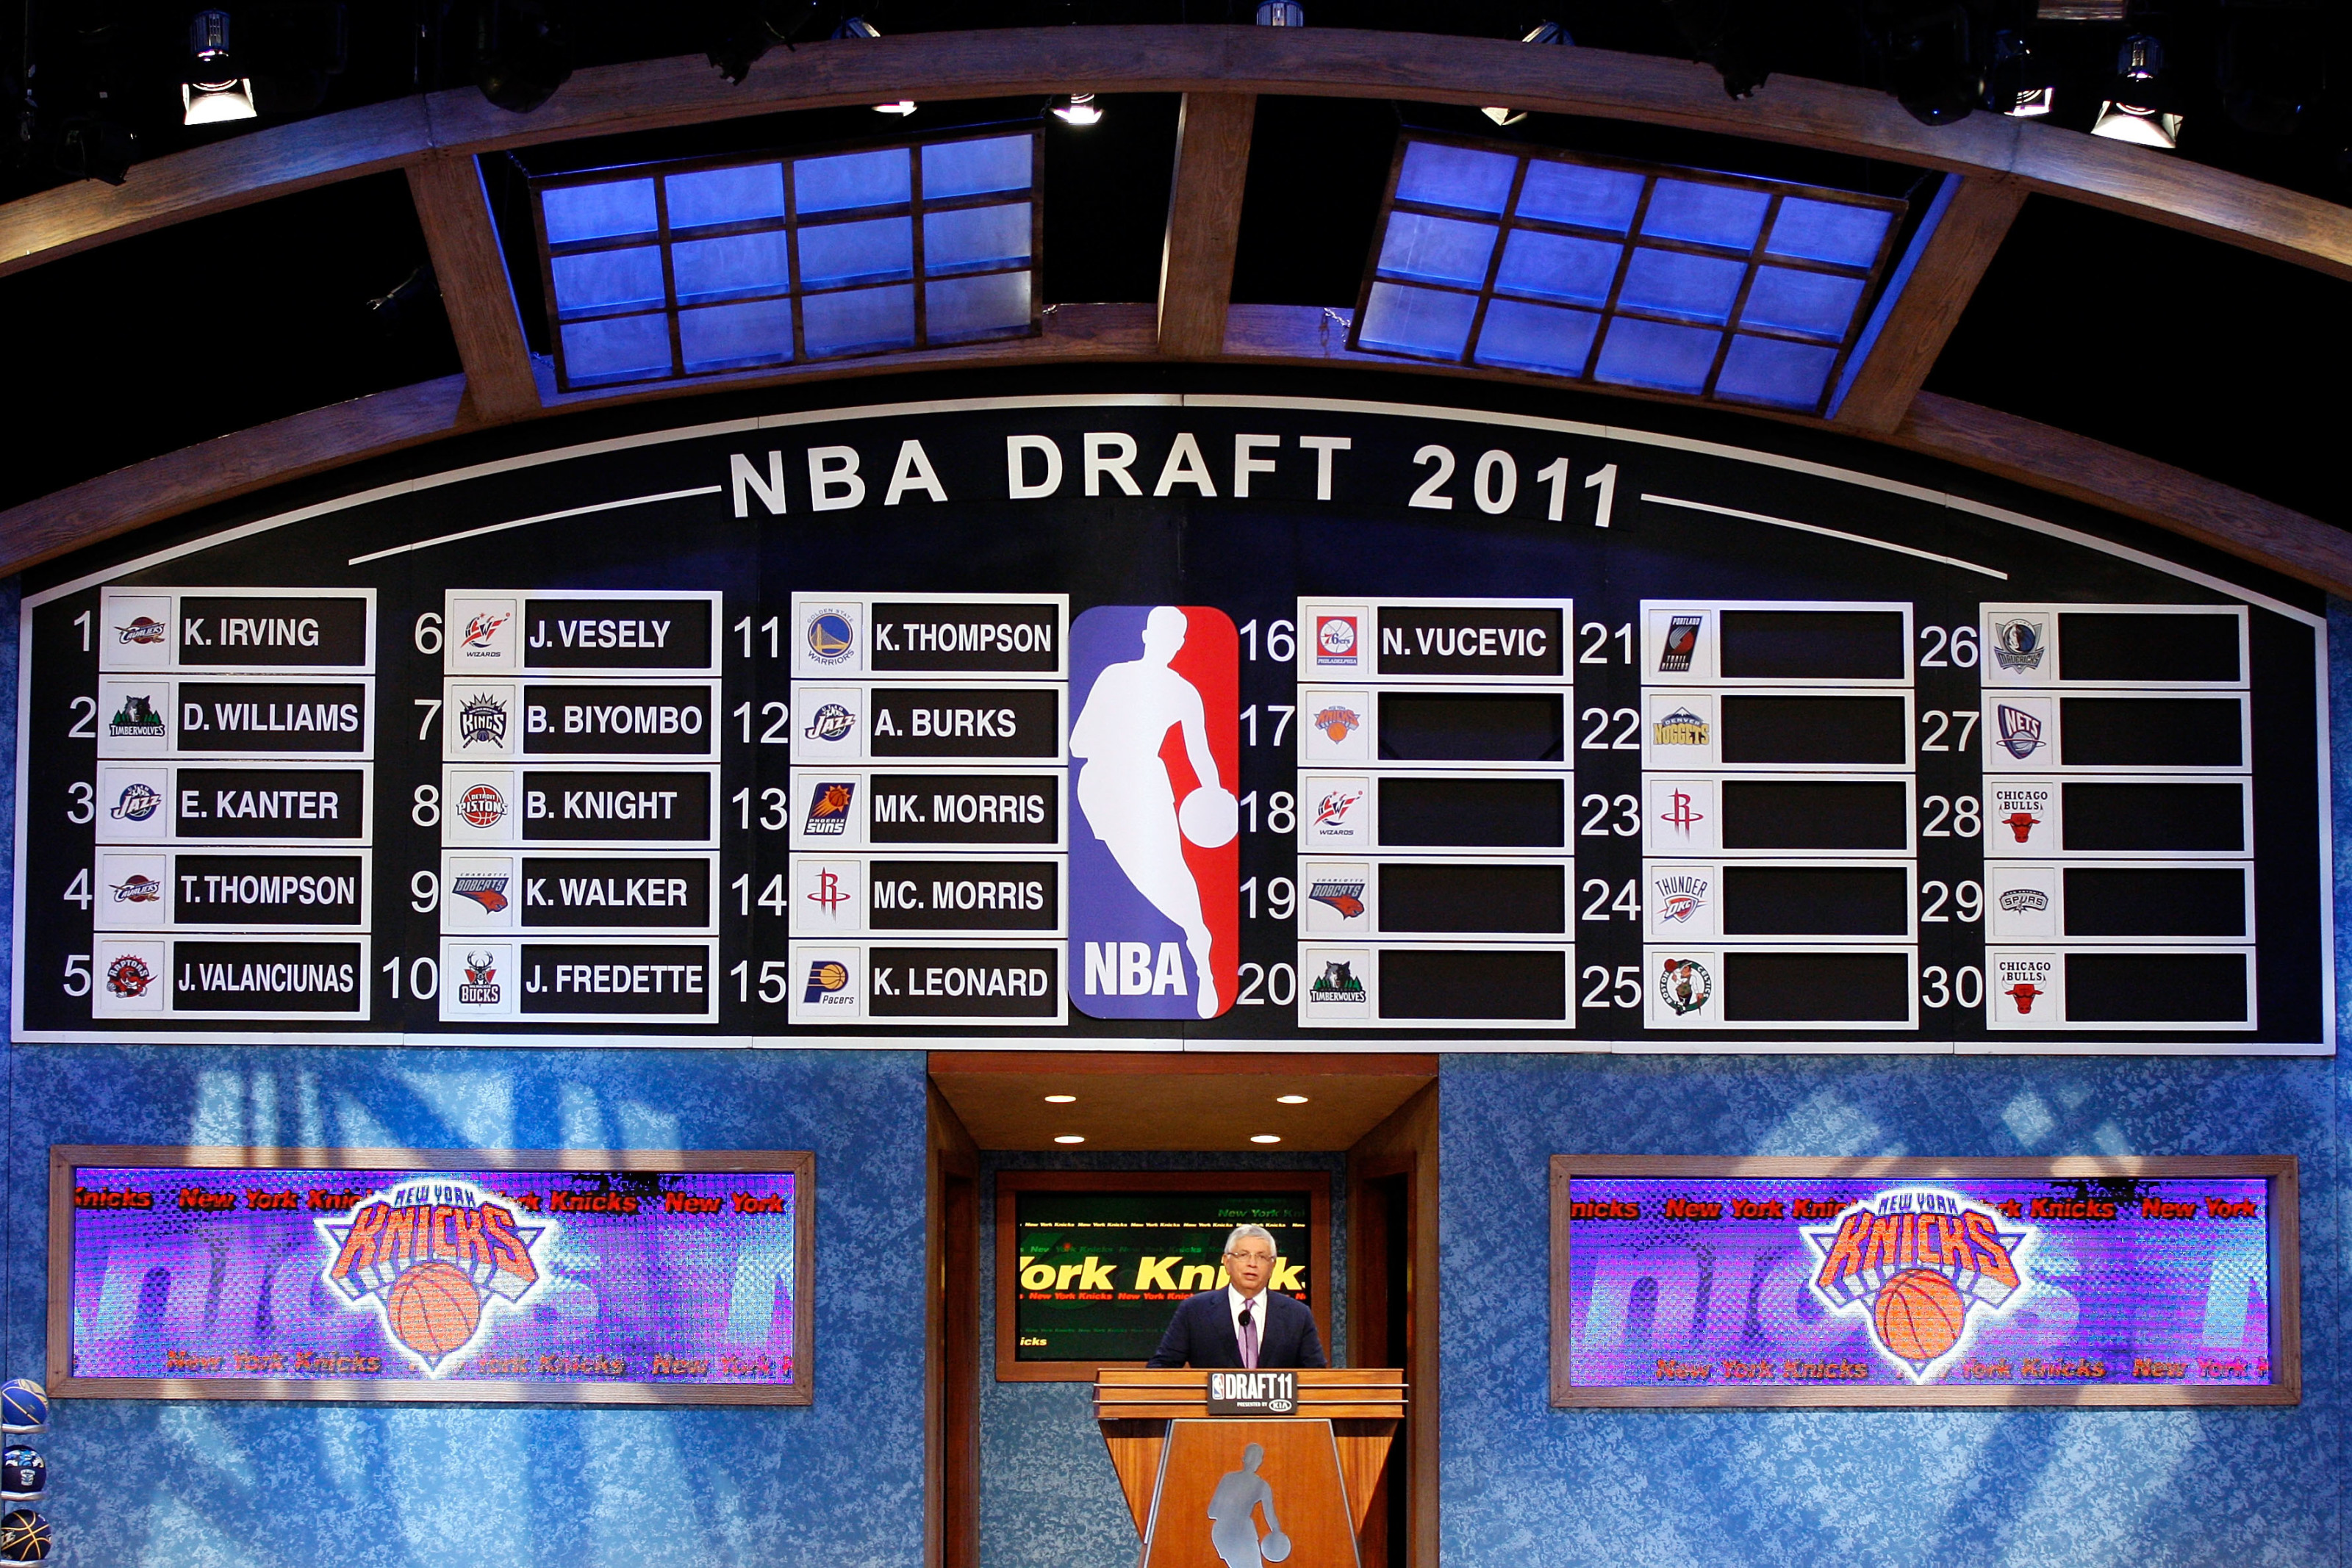 New York Knicks 1st-round NBA Draft picks since 2000